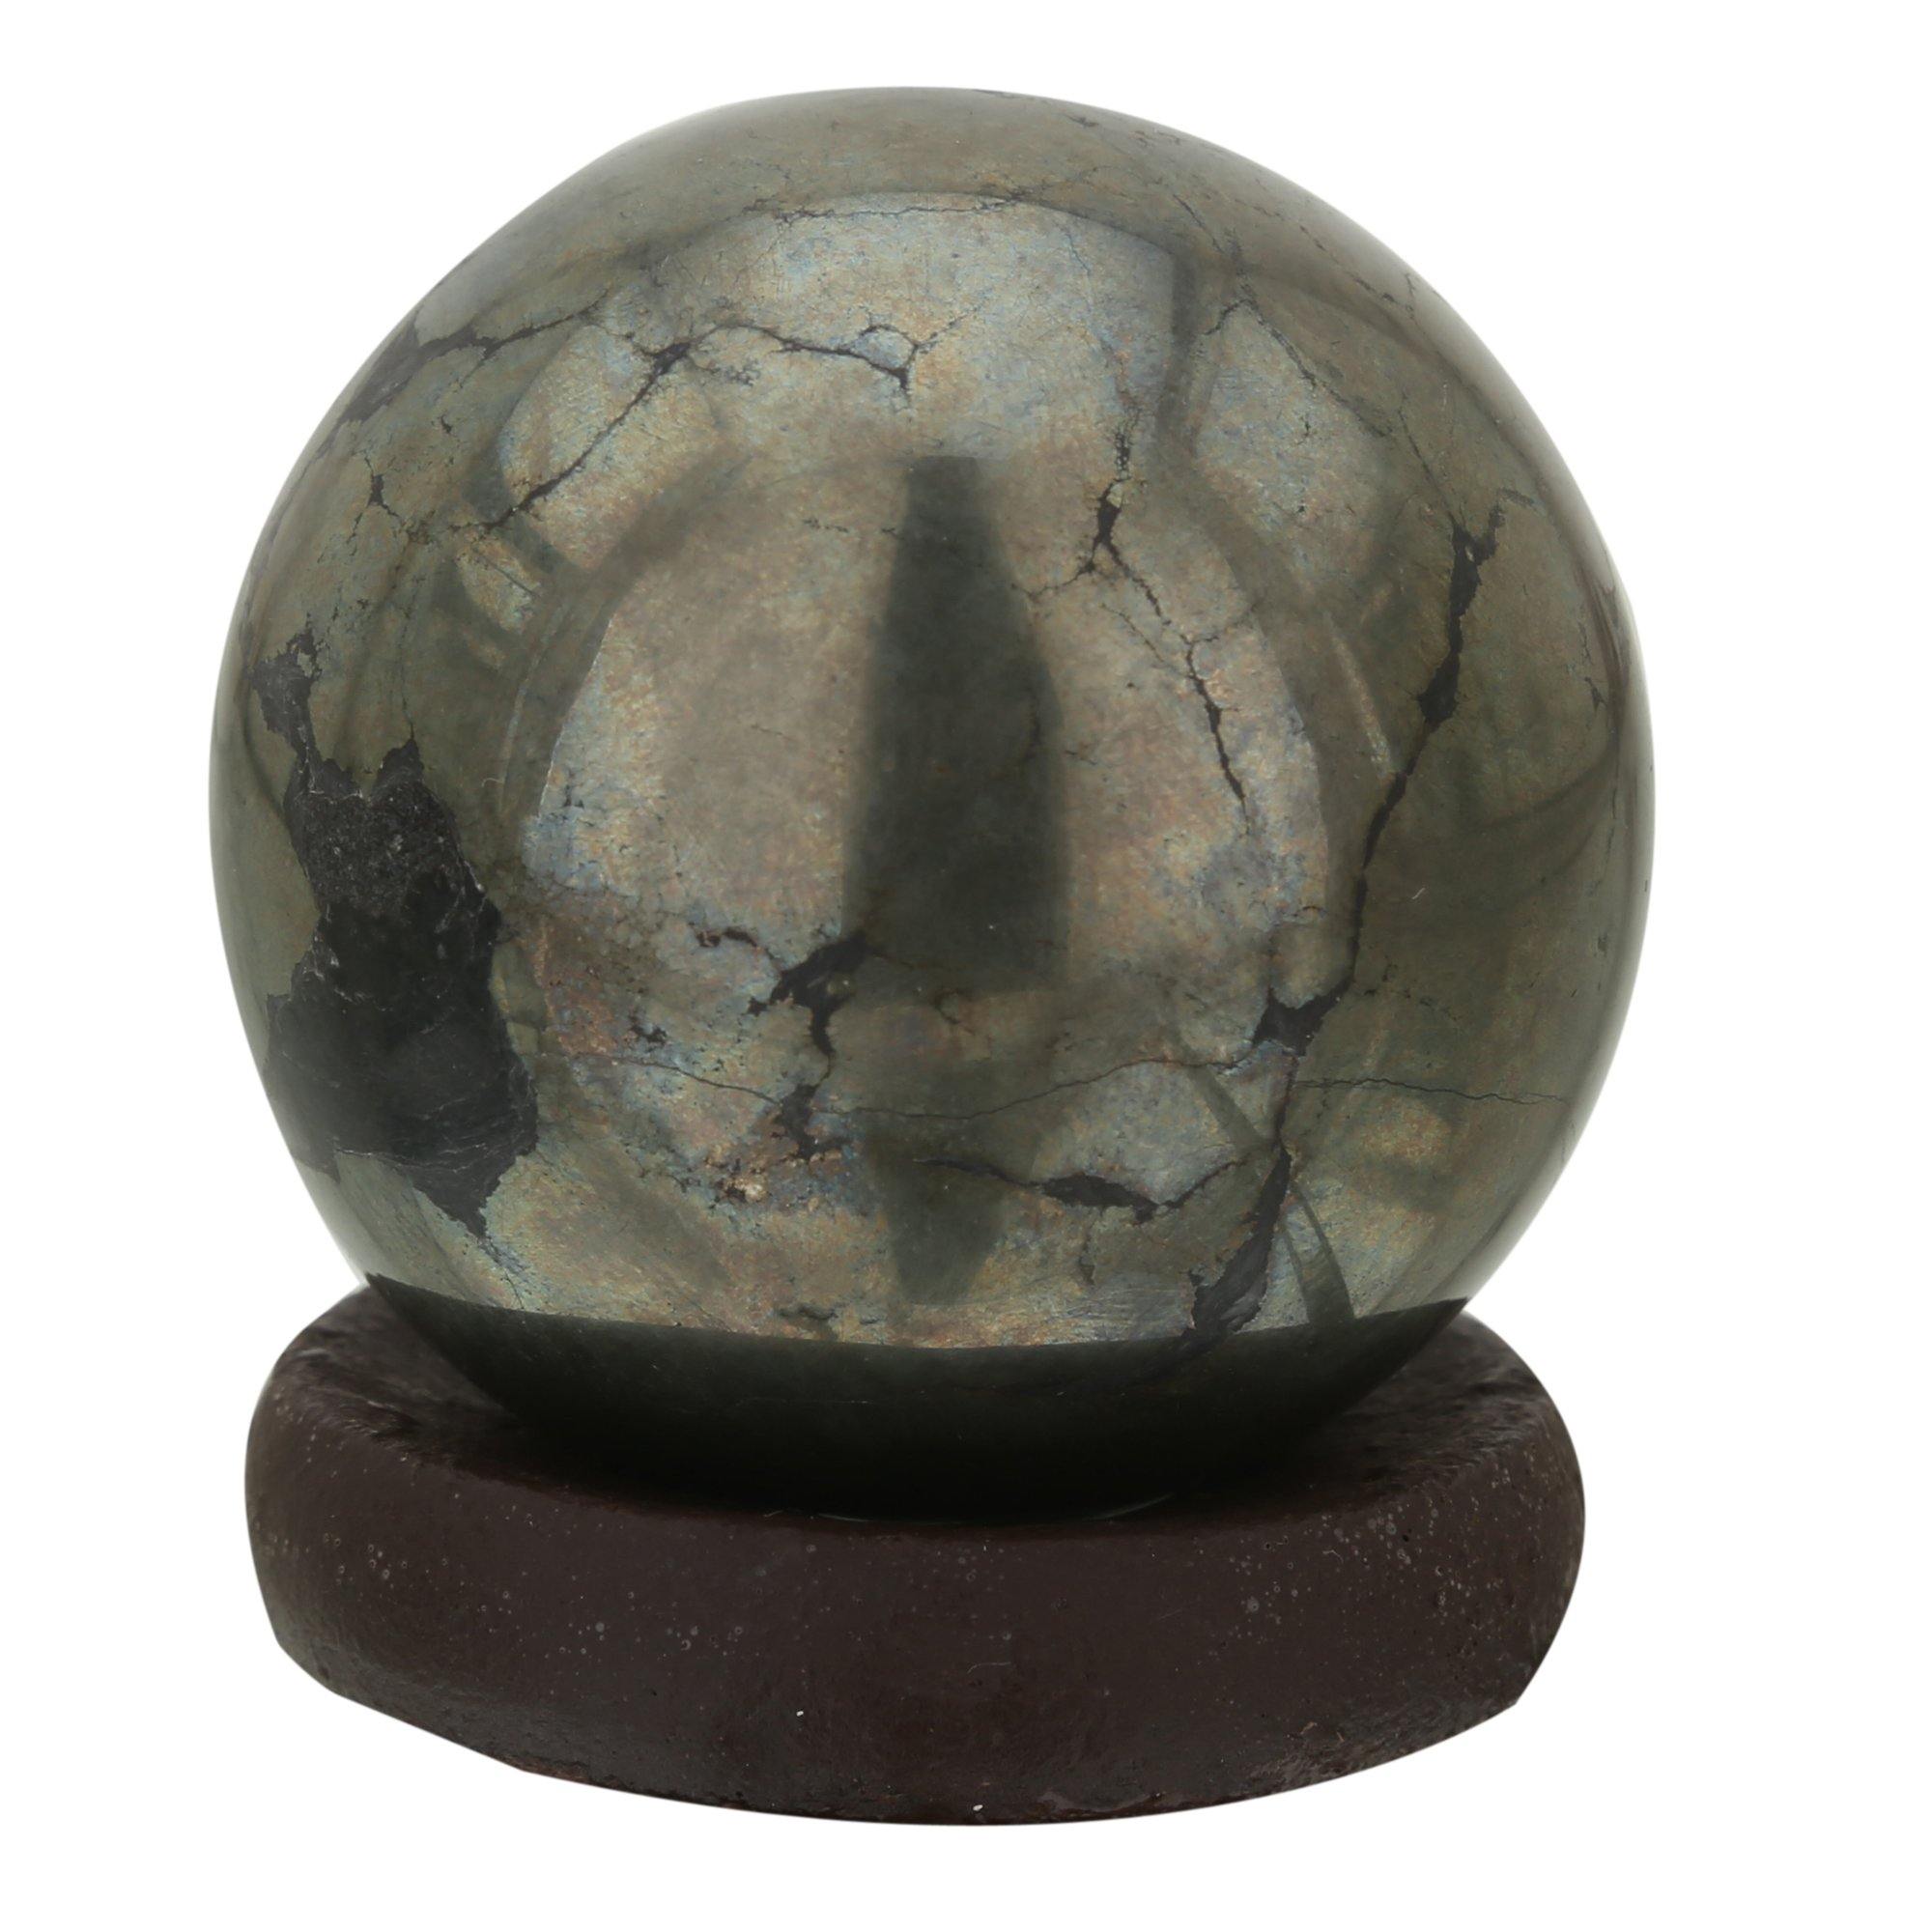 Healing Crystals - Pyrite Gemstone Sphere 1 Kg Lot